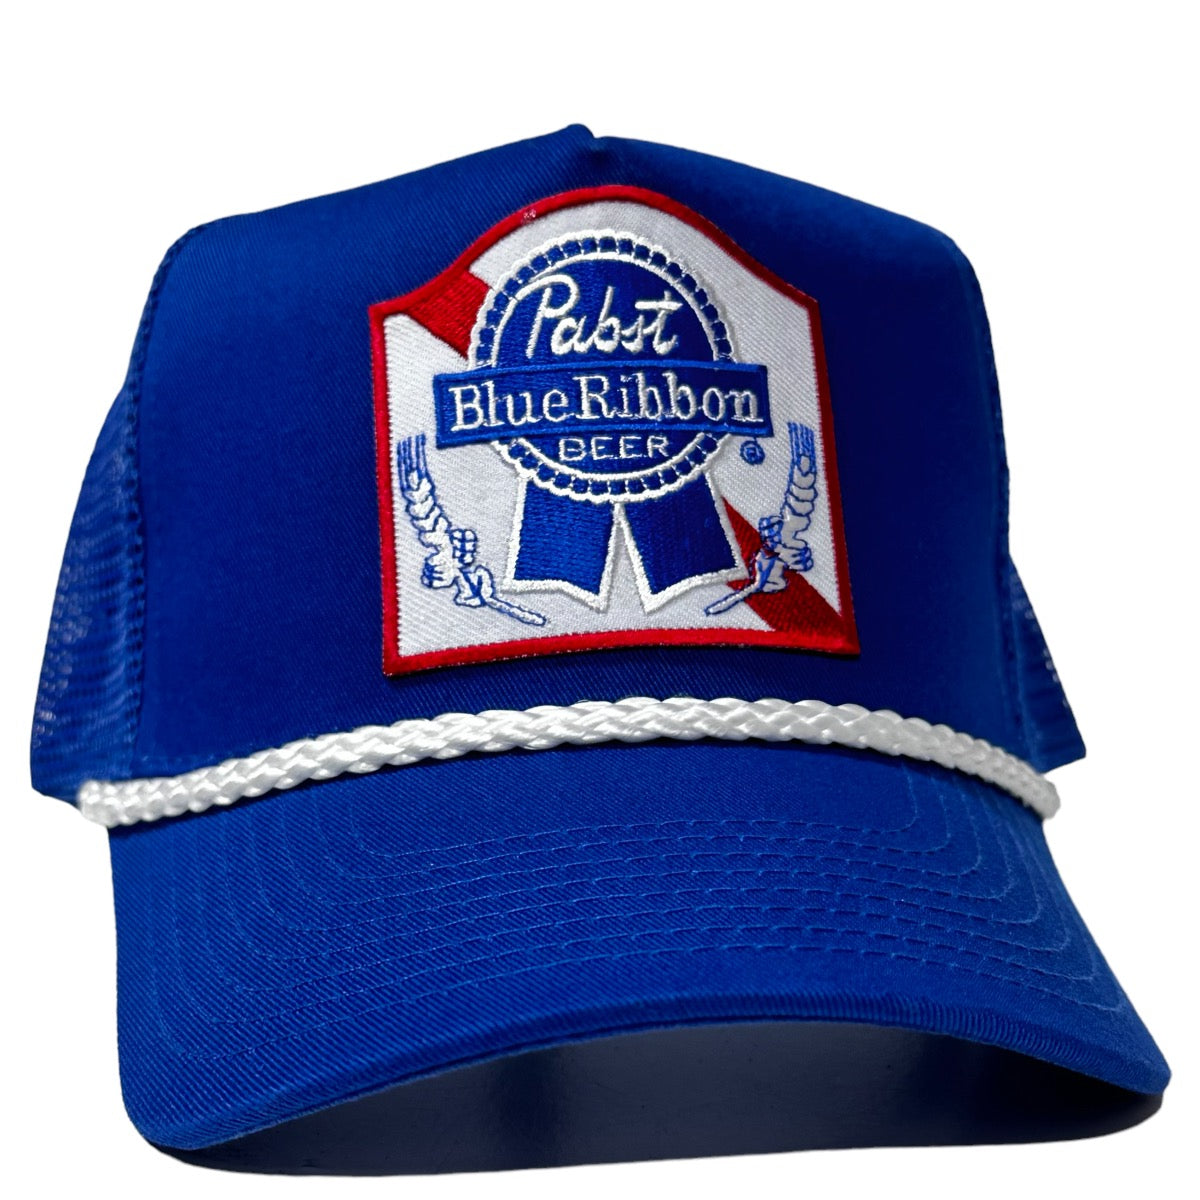 Custom Blue Ribbon Beer on a Vintage Blue Mesh Trucker SnapBack Hat Cap